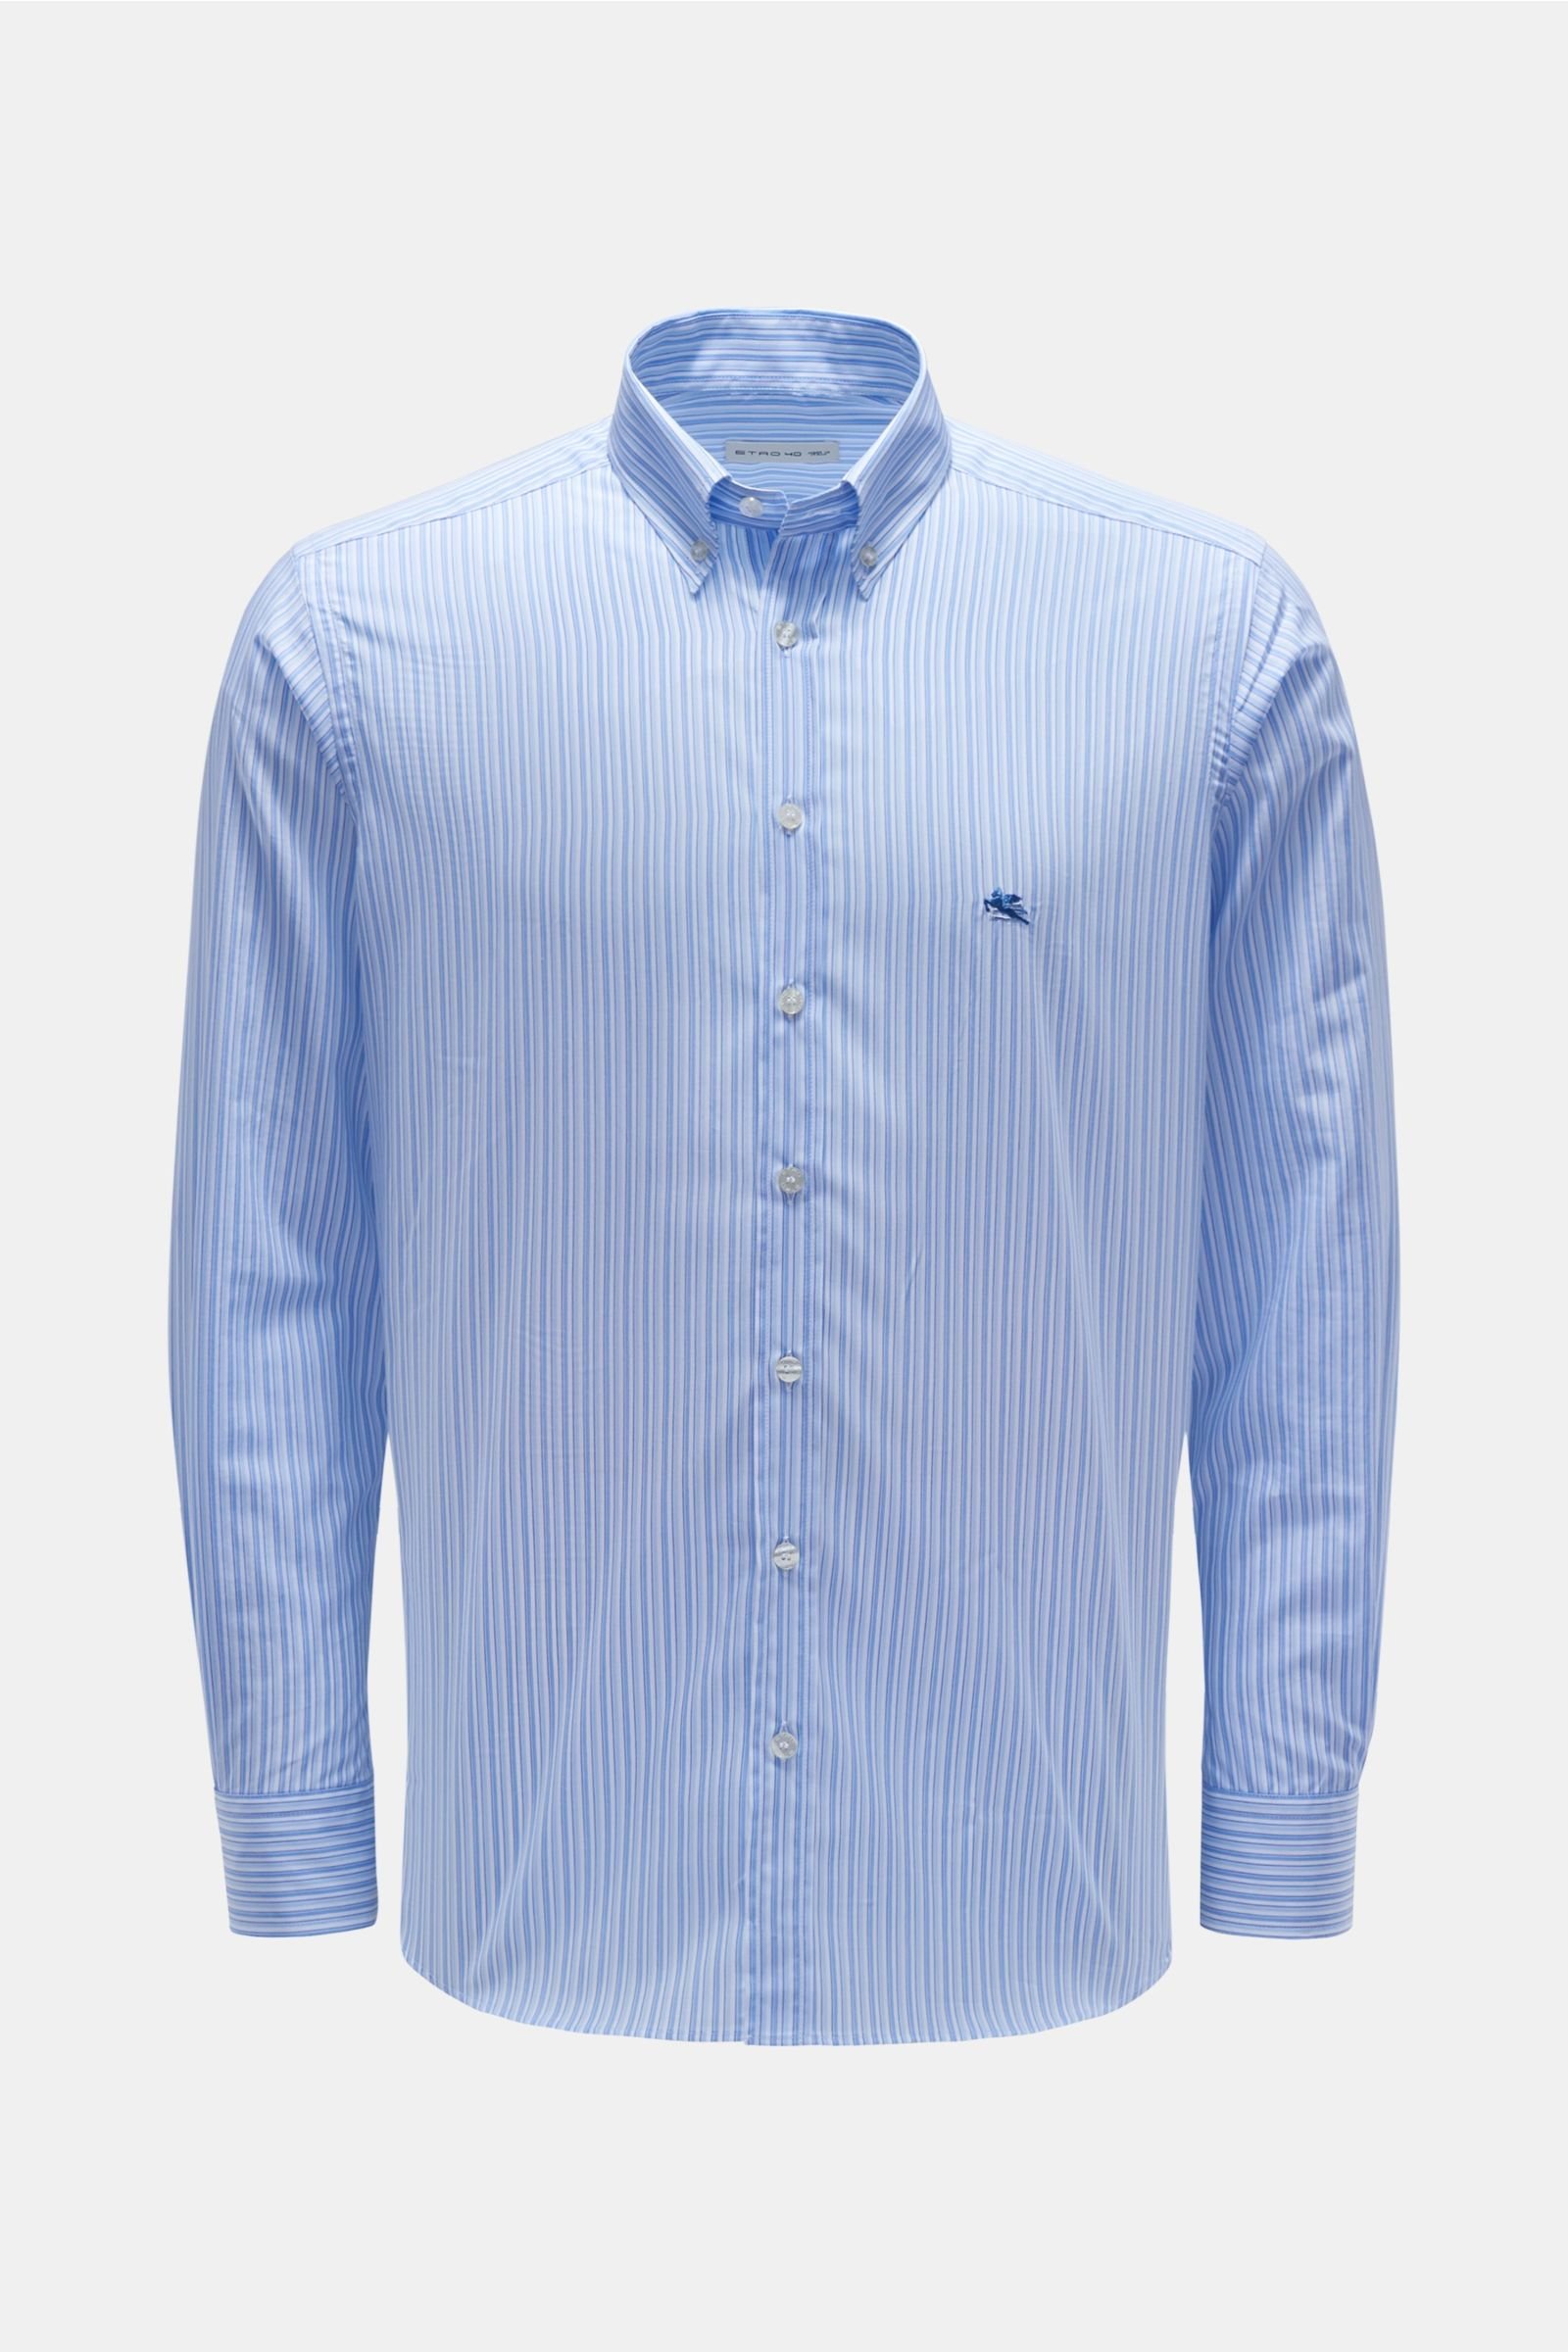 Casual shirt button-down collar light blue/pastel blue striped